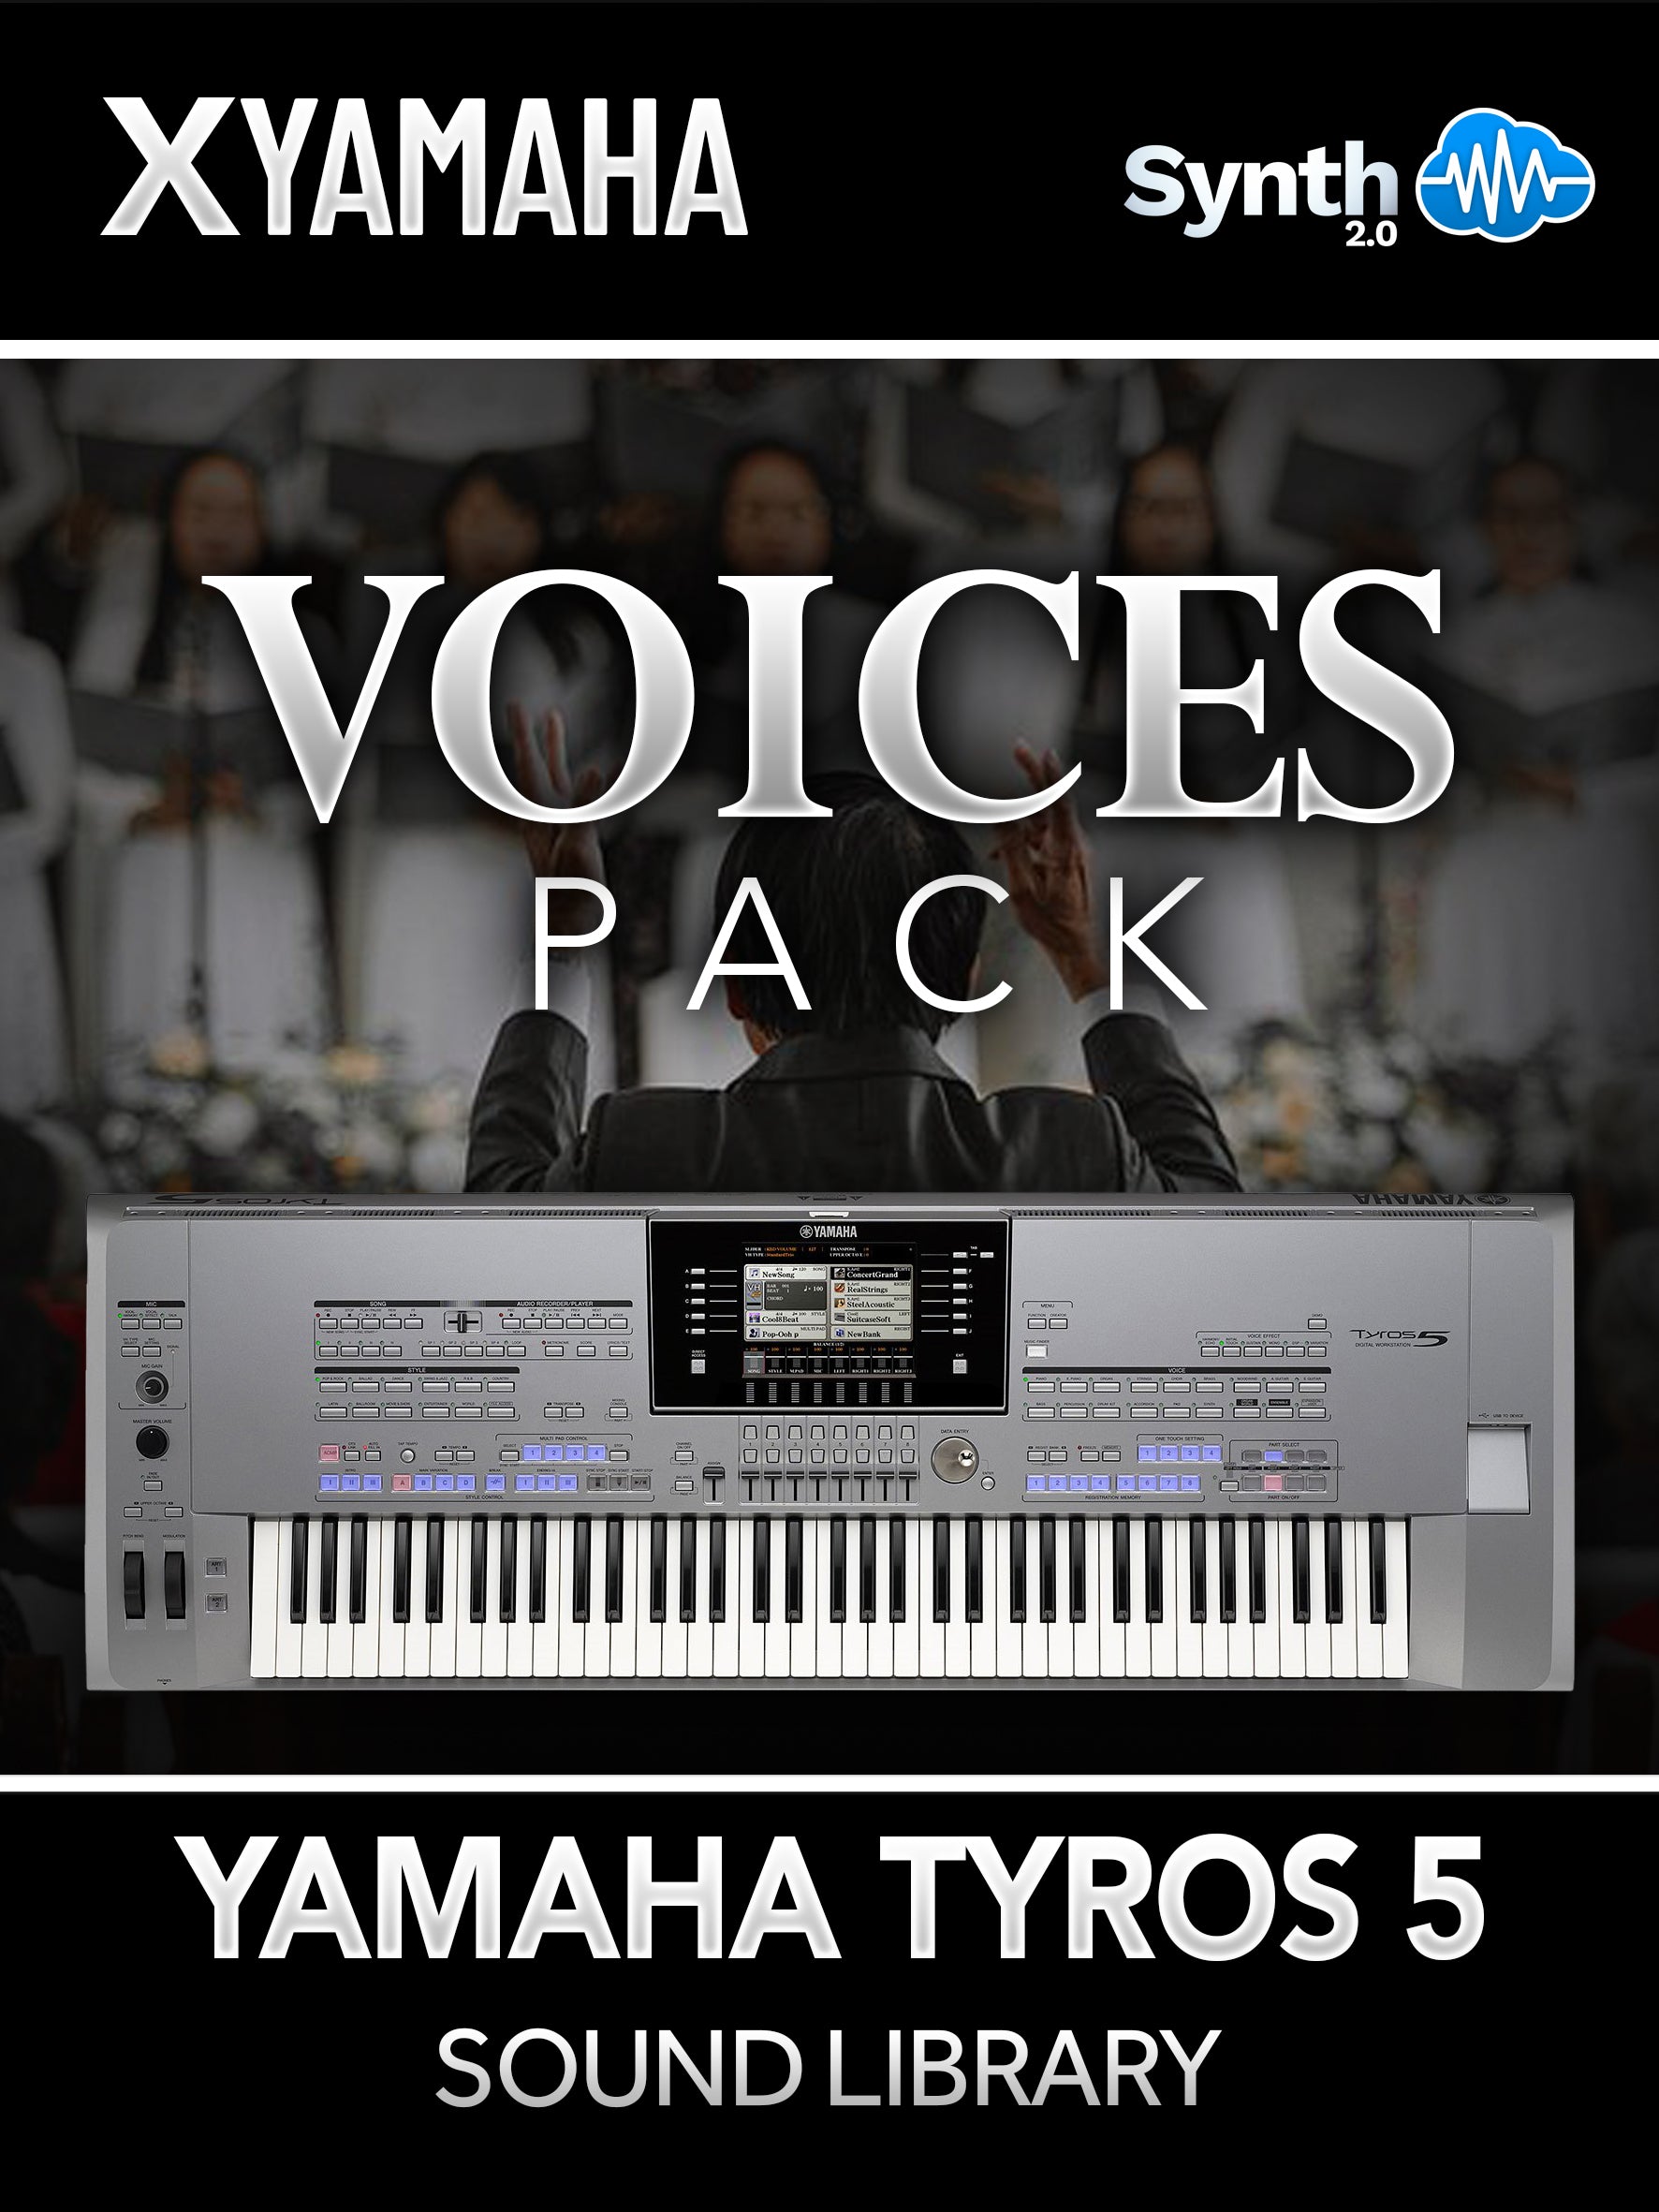 GNL009 - ( Bundle ) - Pipe & Church Organs + Voices Pack - Yamaha TYROS 5